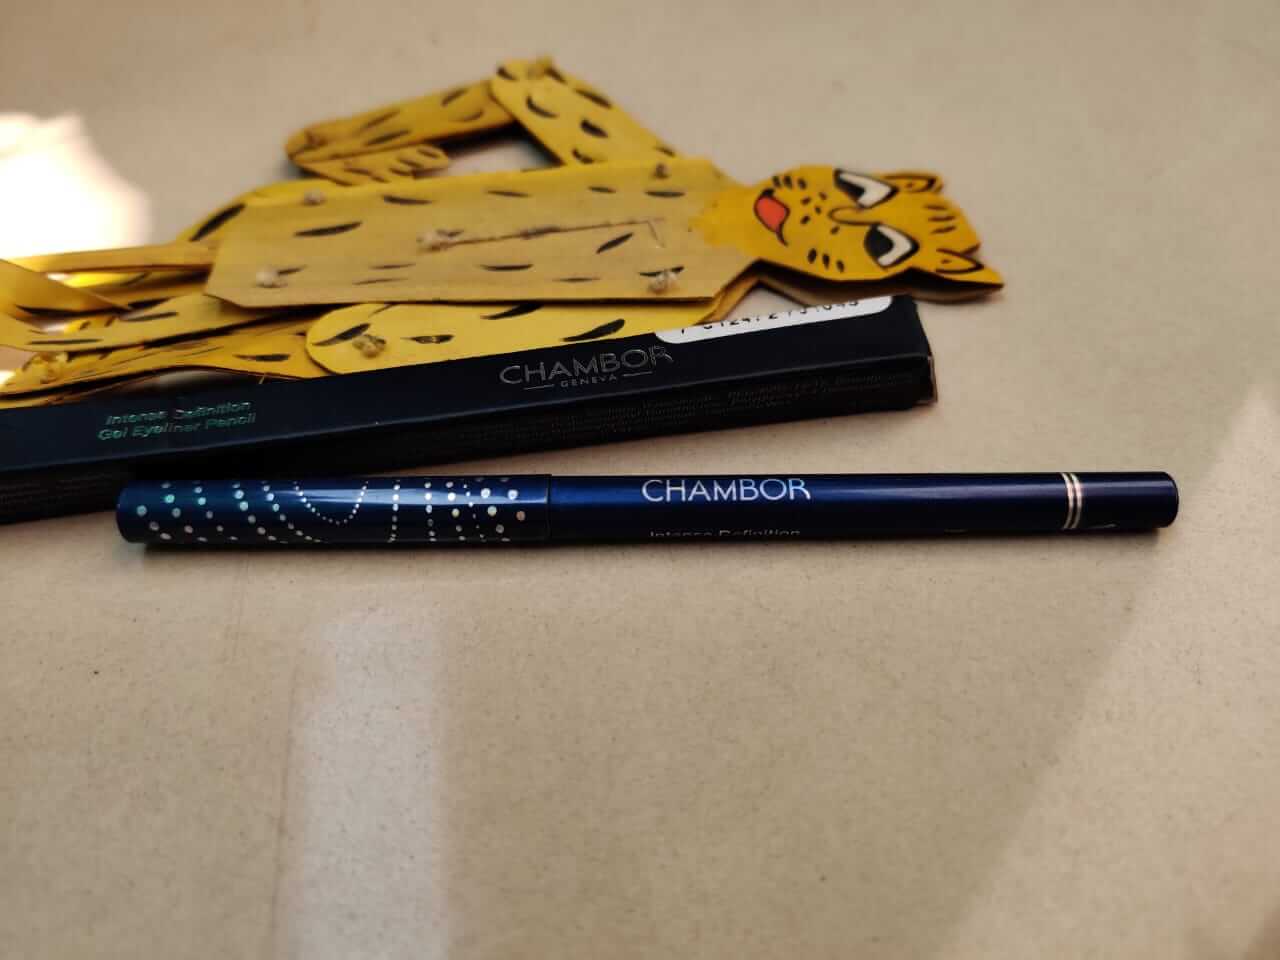 Chambor Gel Eyeliner Pencil – Sapphire Blue Review